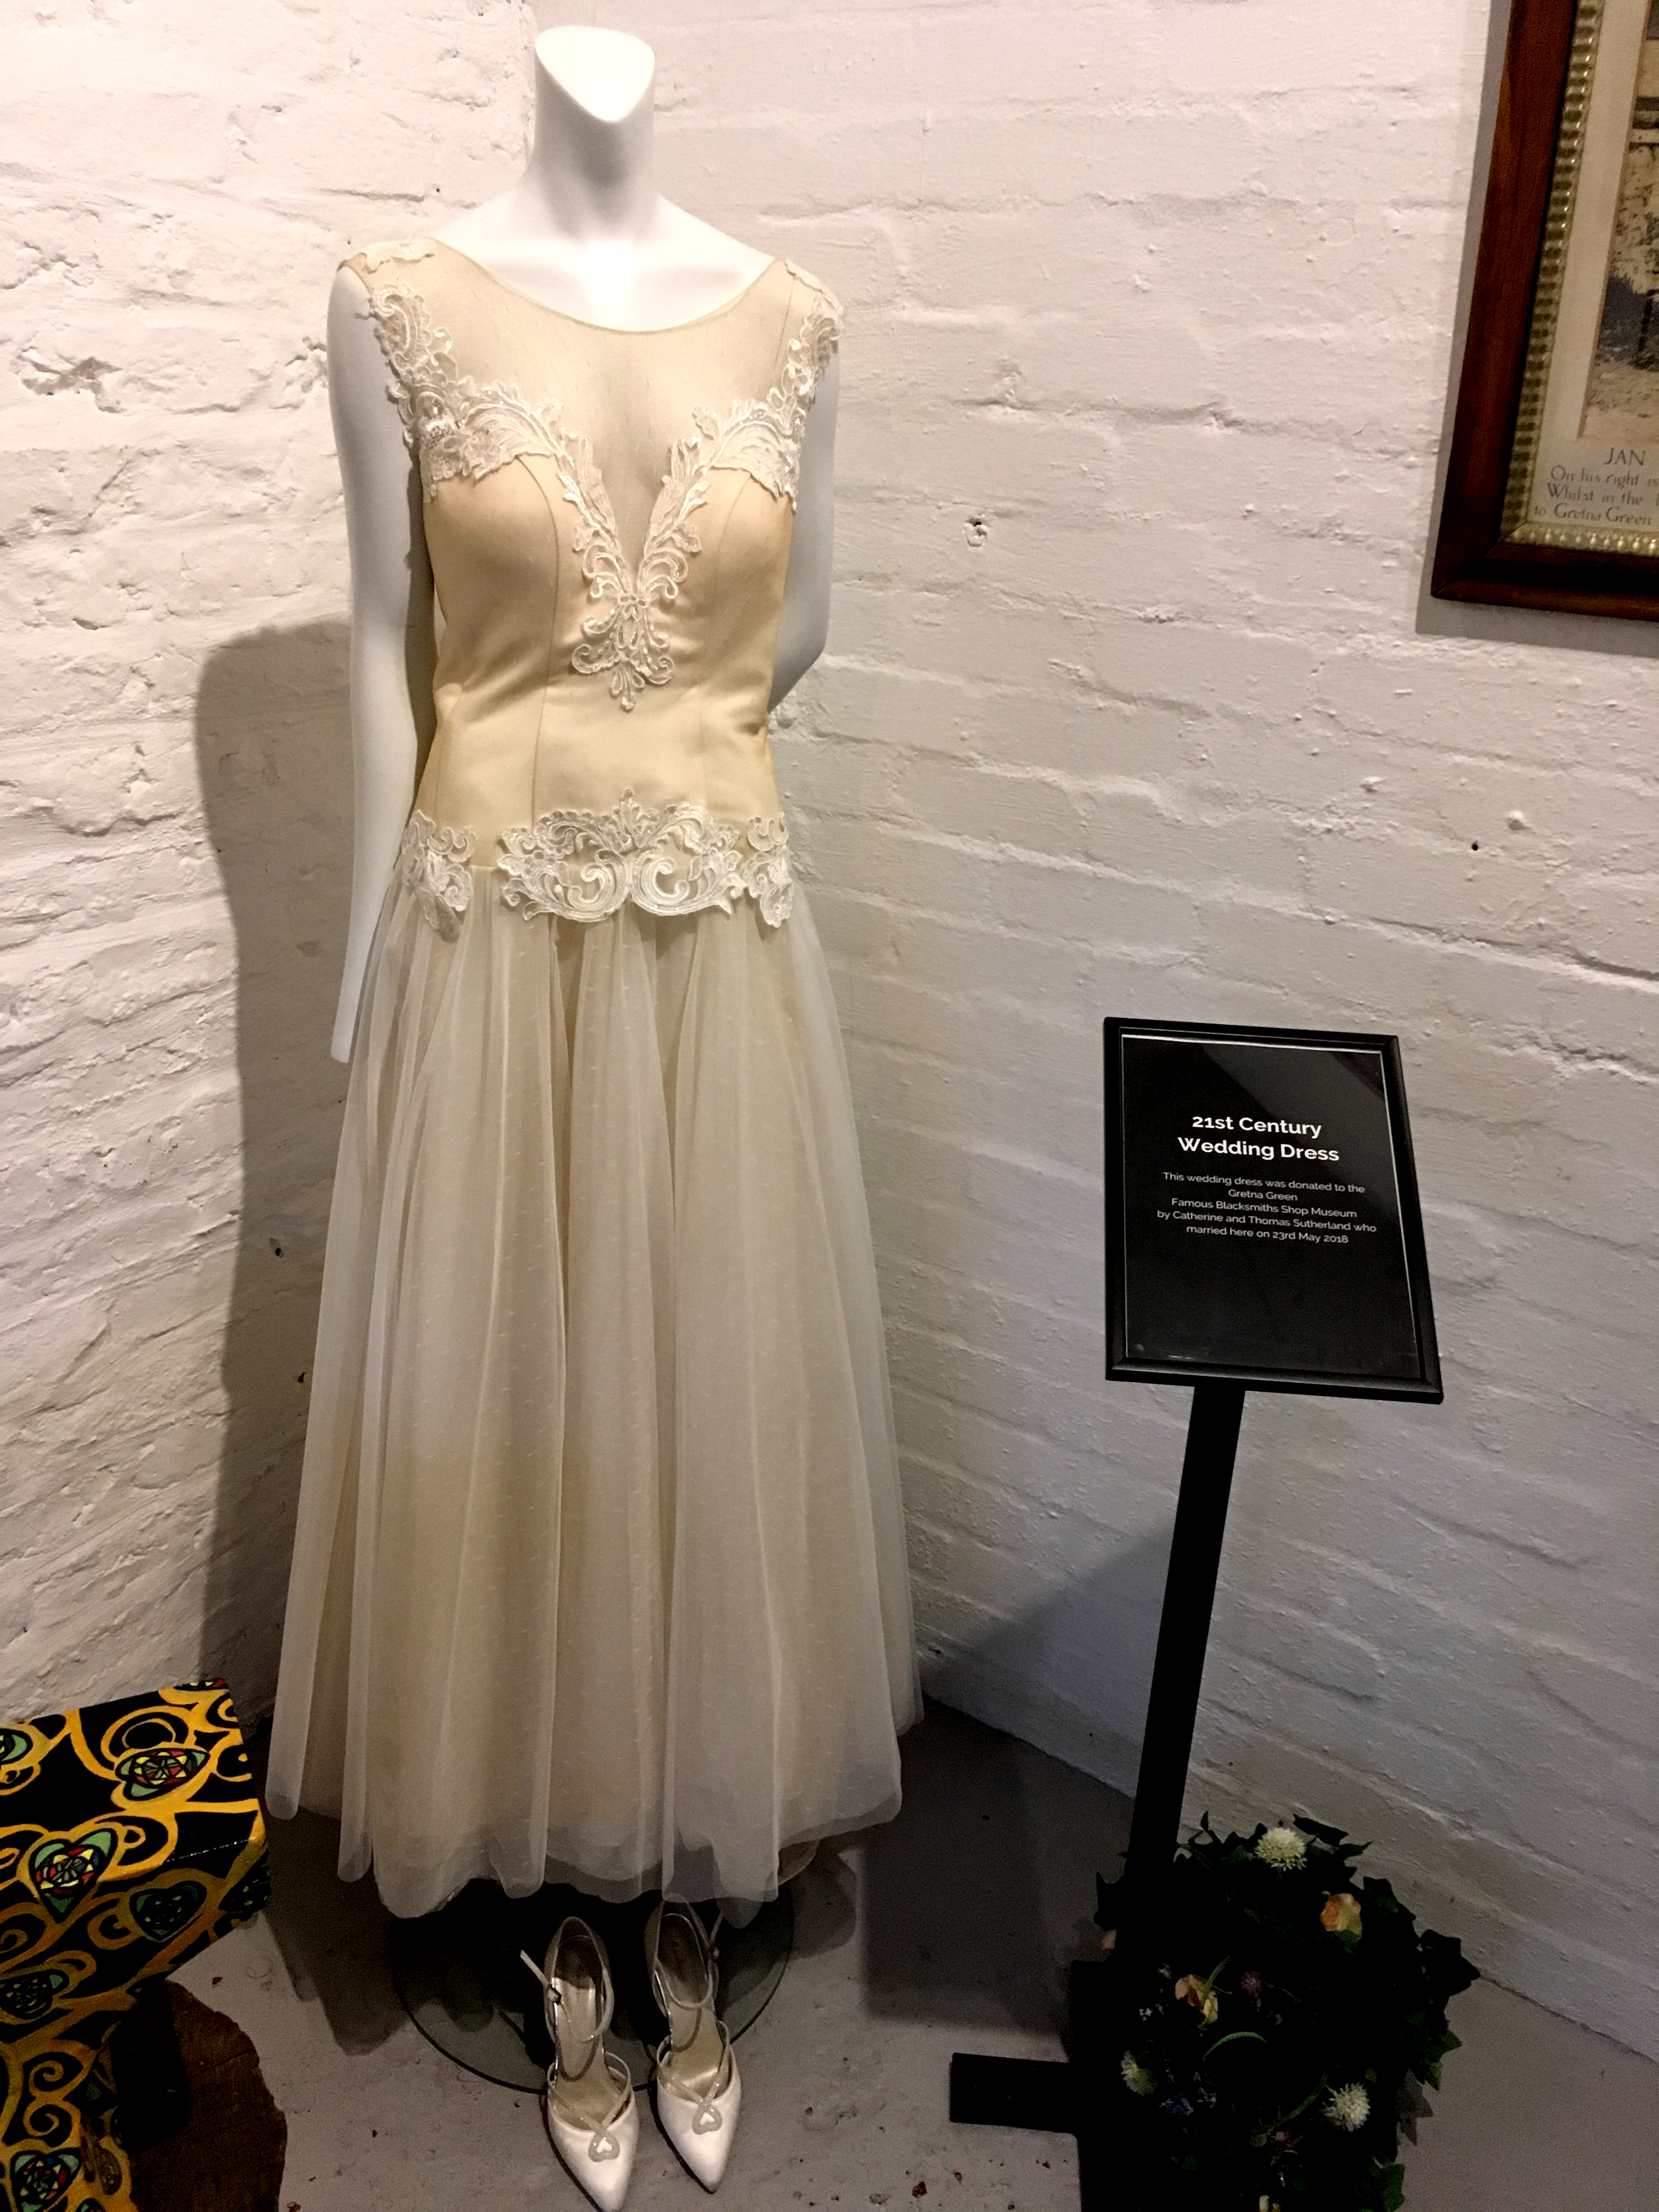 21 century wedding dress